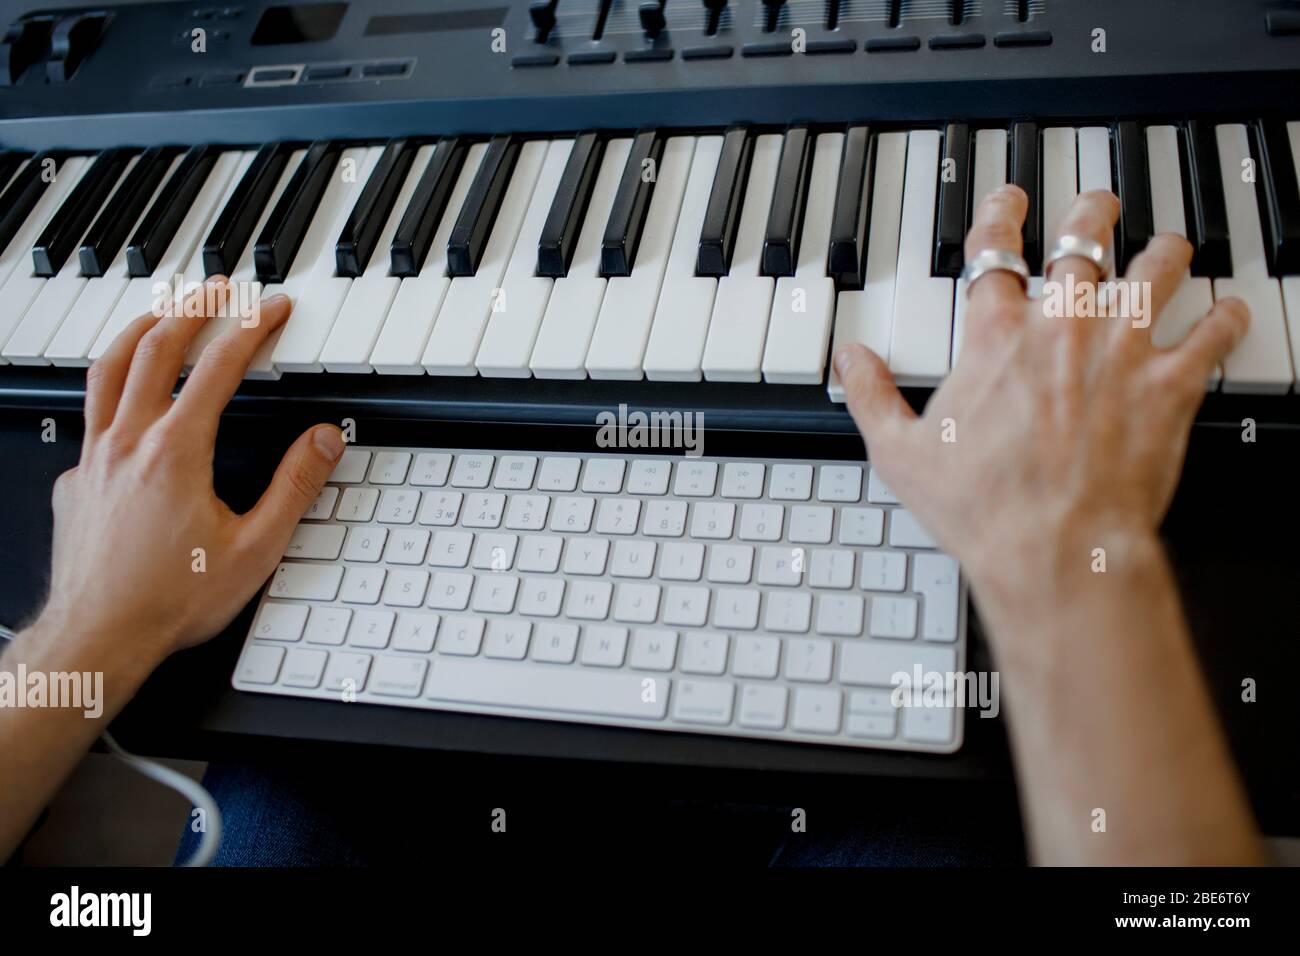 Play Piano in computer using computer keyboard 